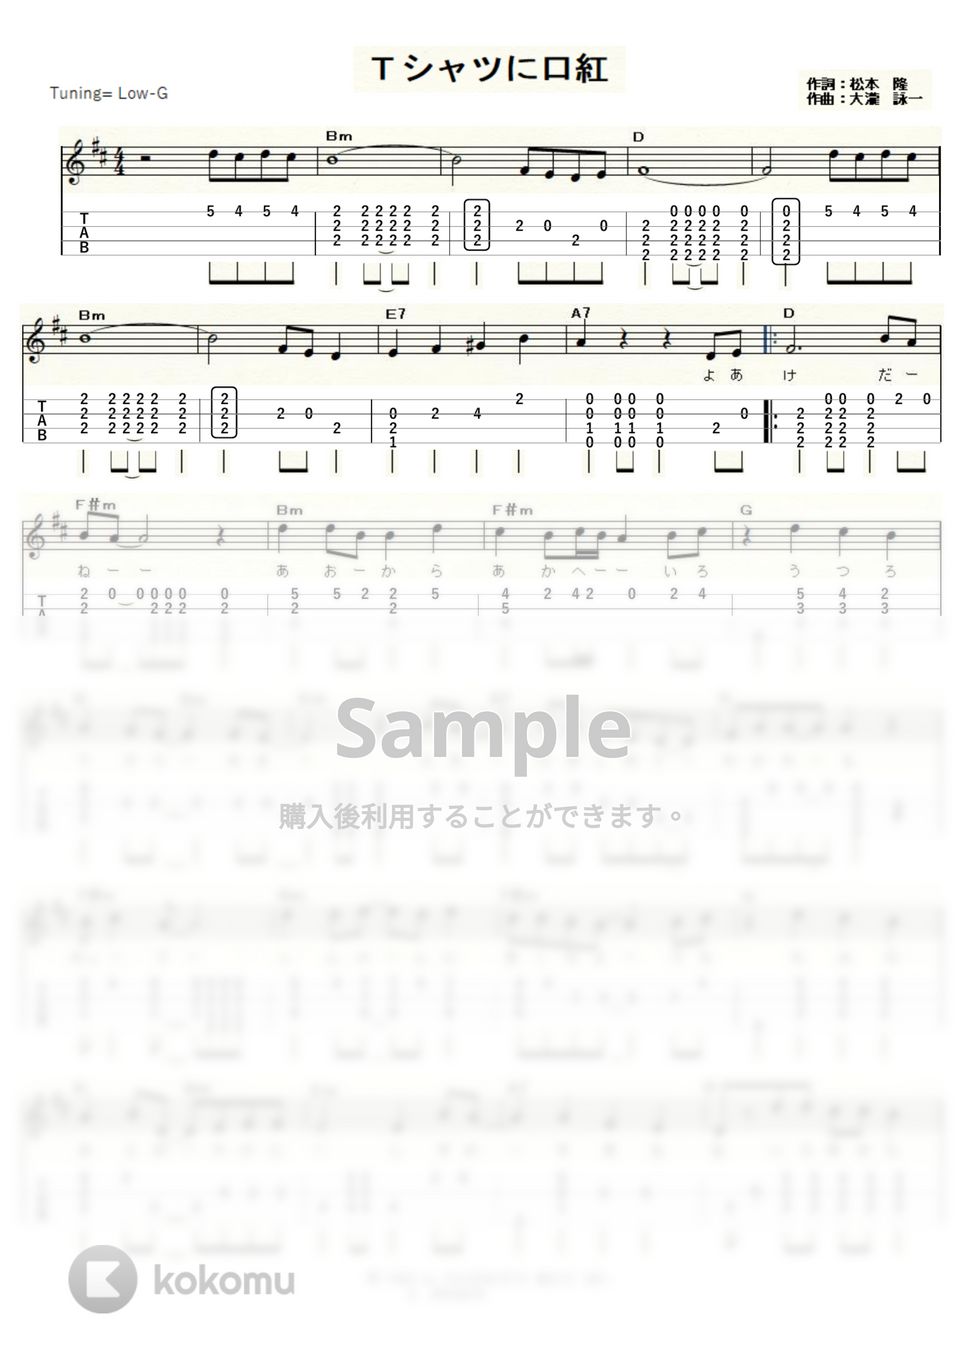 RAT&STAR - Tシャツに口紅 (Low-G) by ukulelepapa